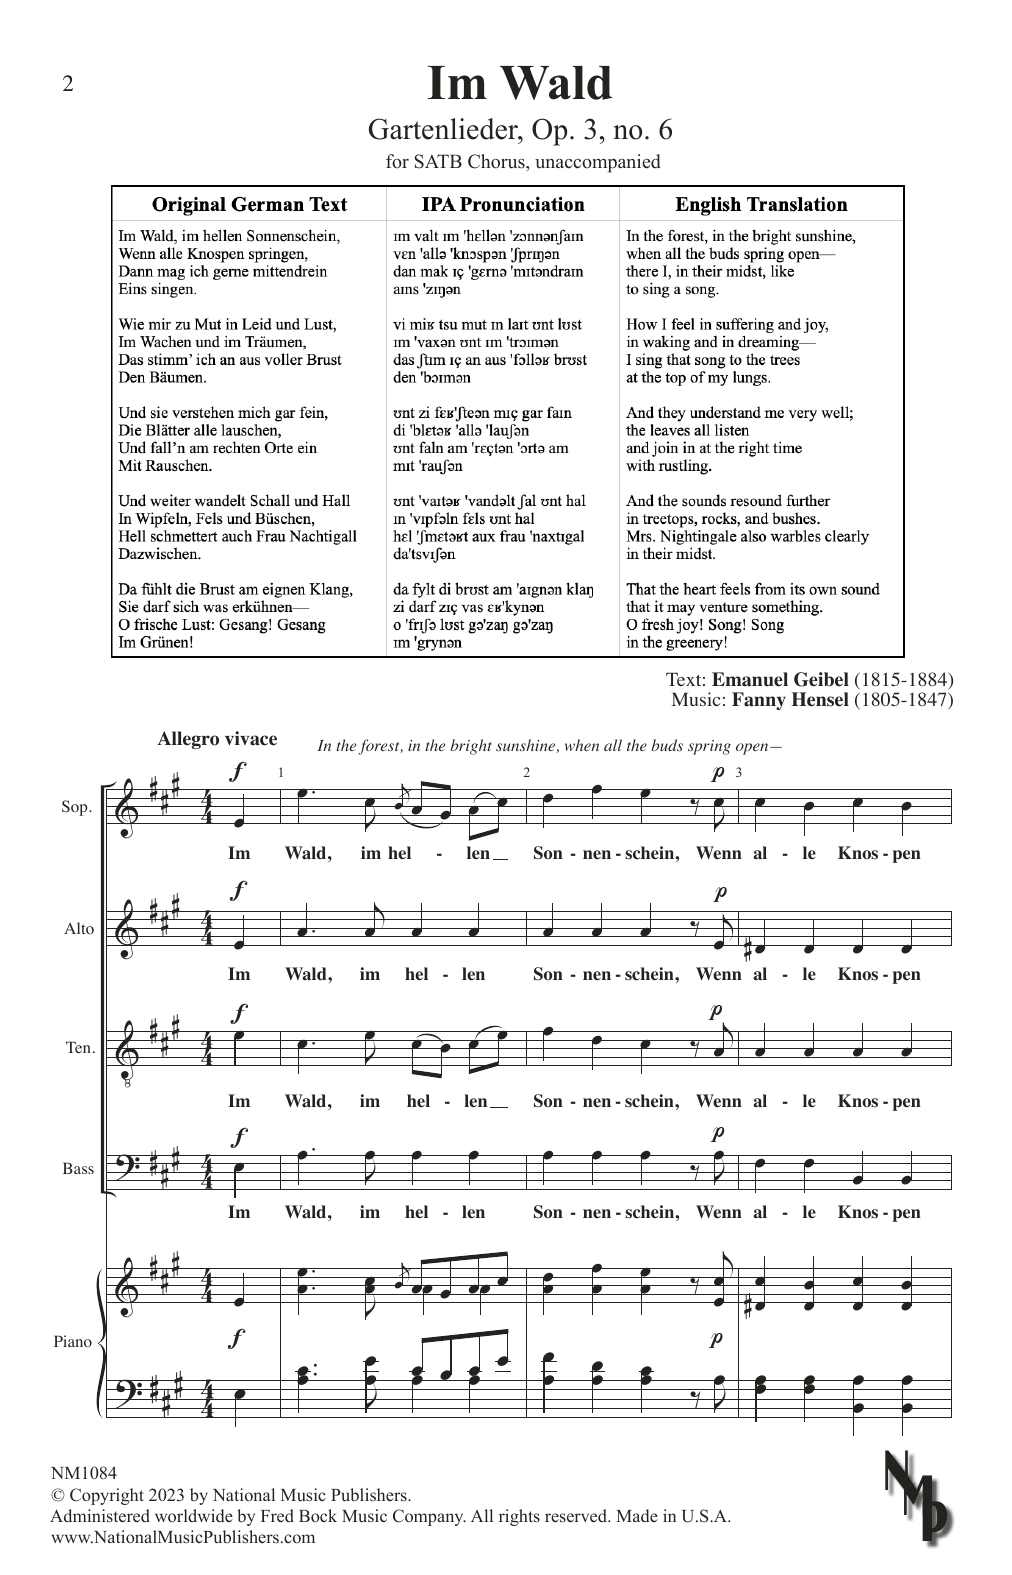 Fanny Hensel Im Wald (Gartenlieder, Op. 3, no. 6) sheet music notes and chords arranged for SATB Choir